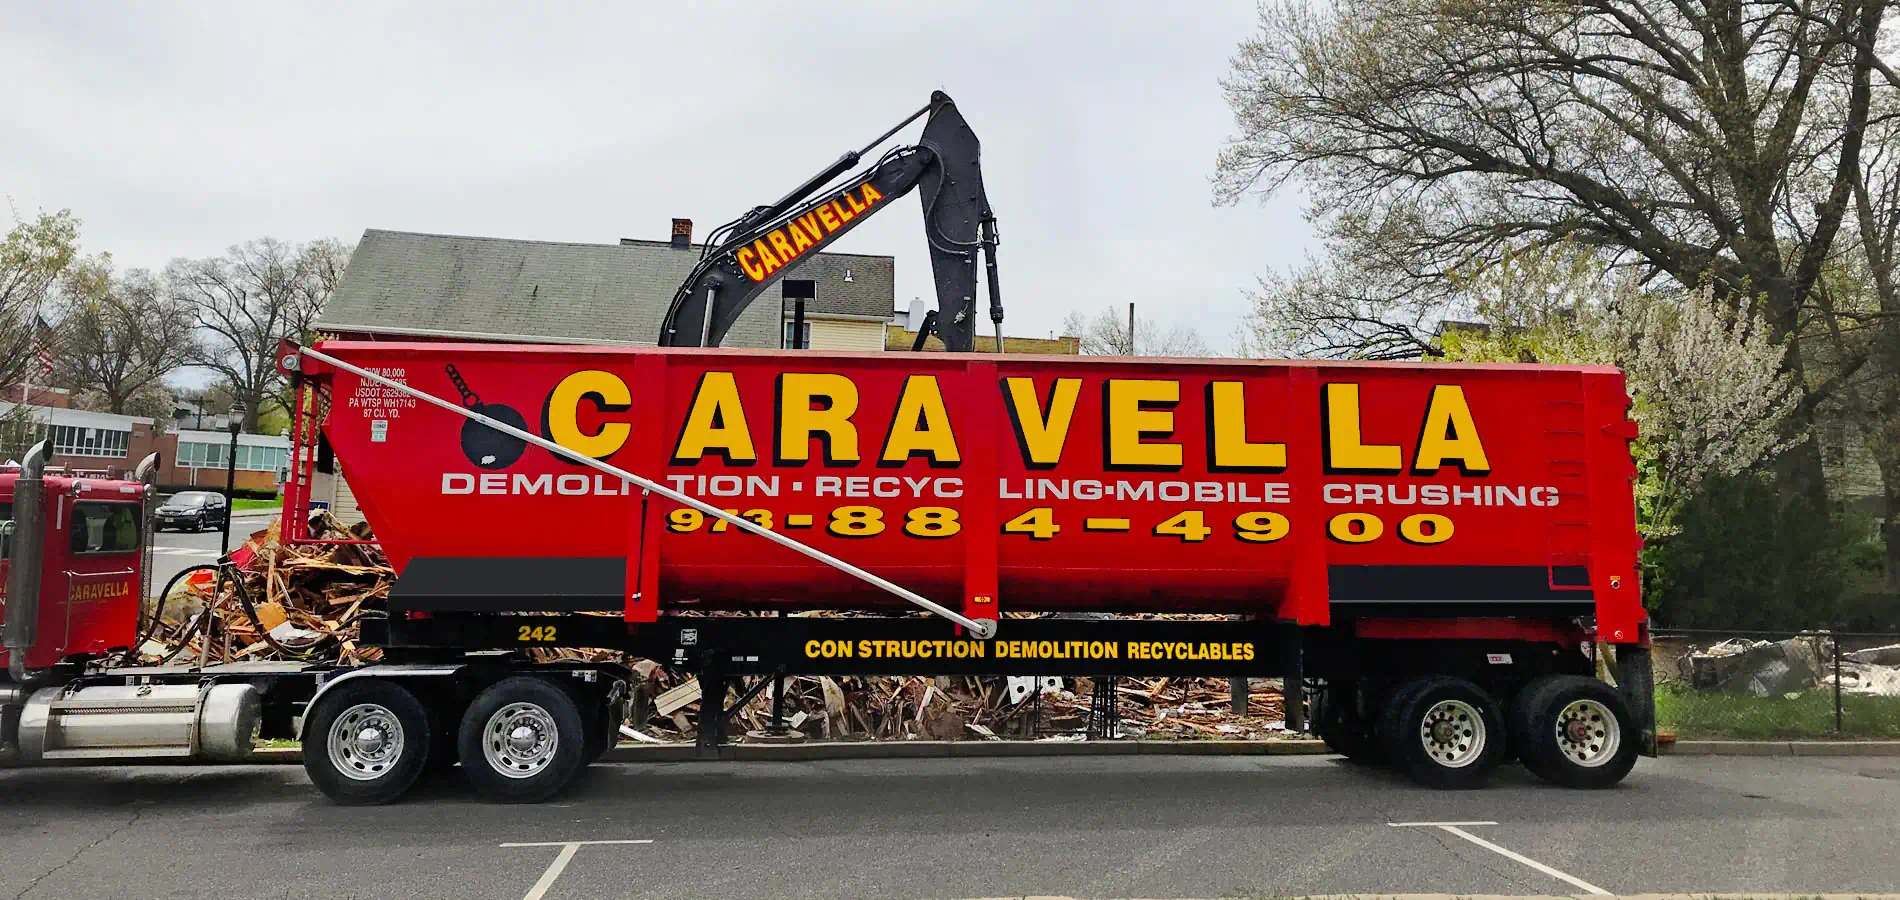 Demolition Services in New Jersey | Caravella Demolition